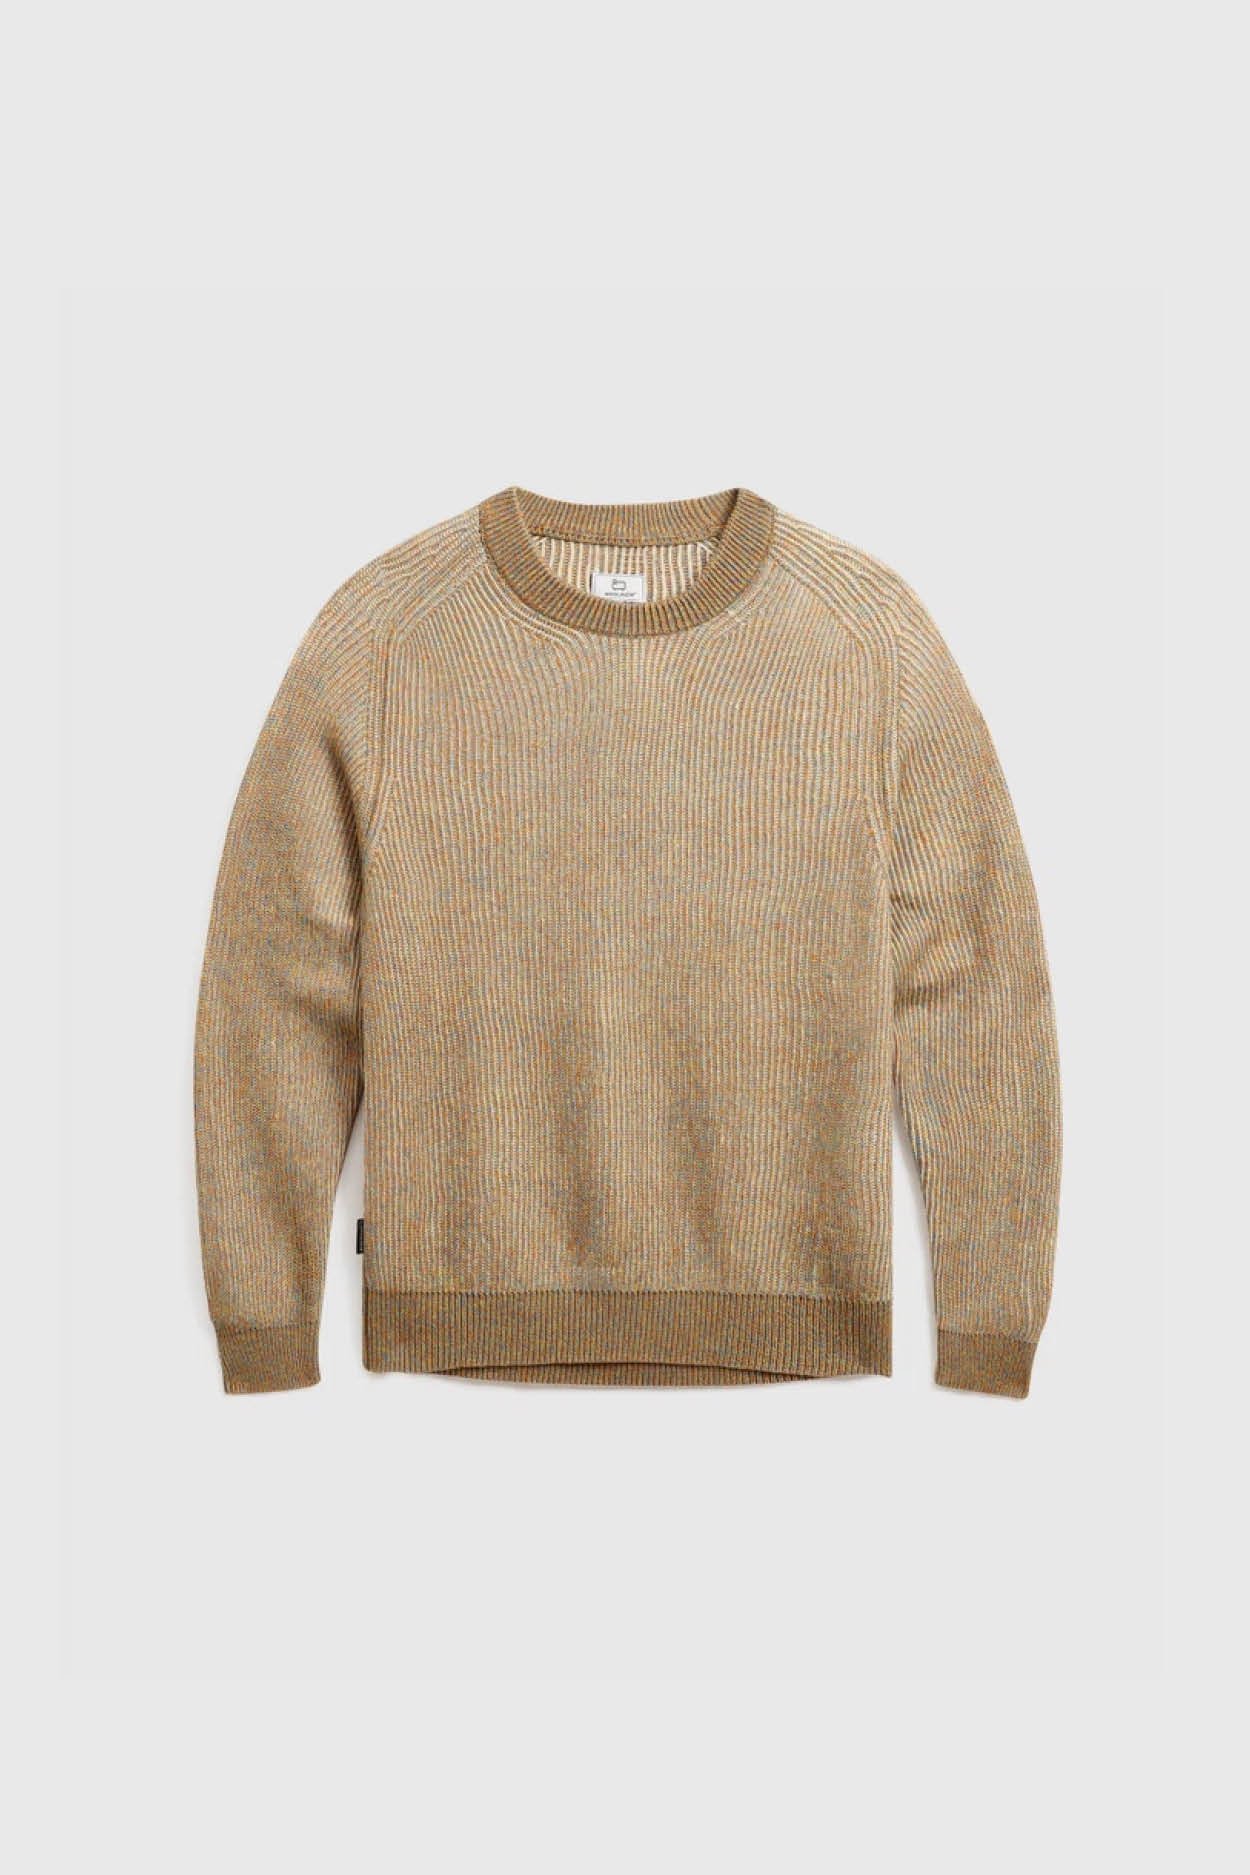 Crewneck sweater in cotton linen blend